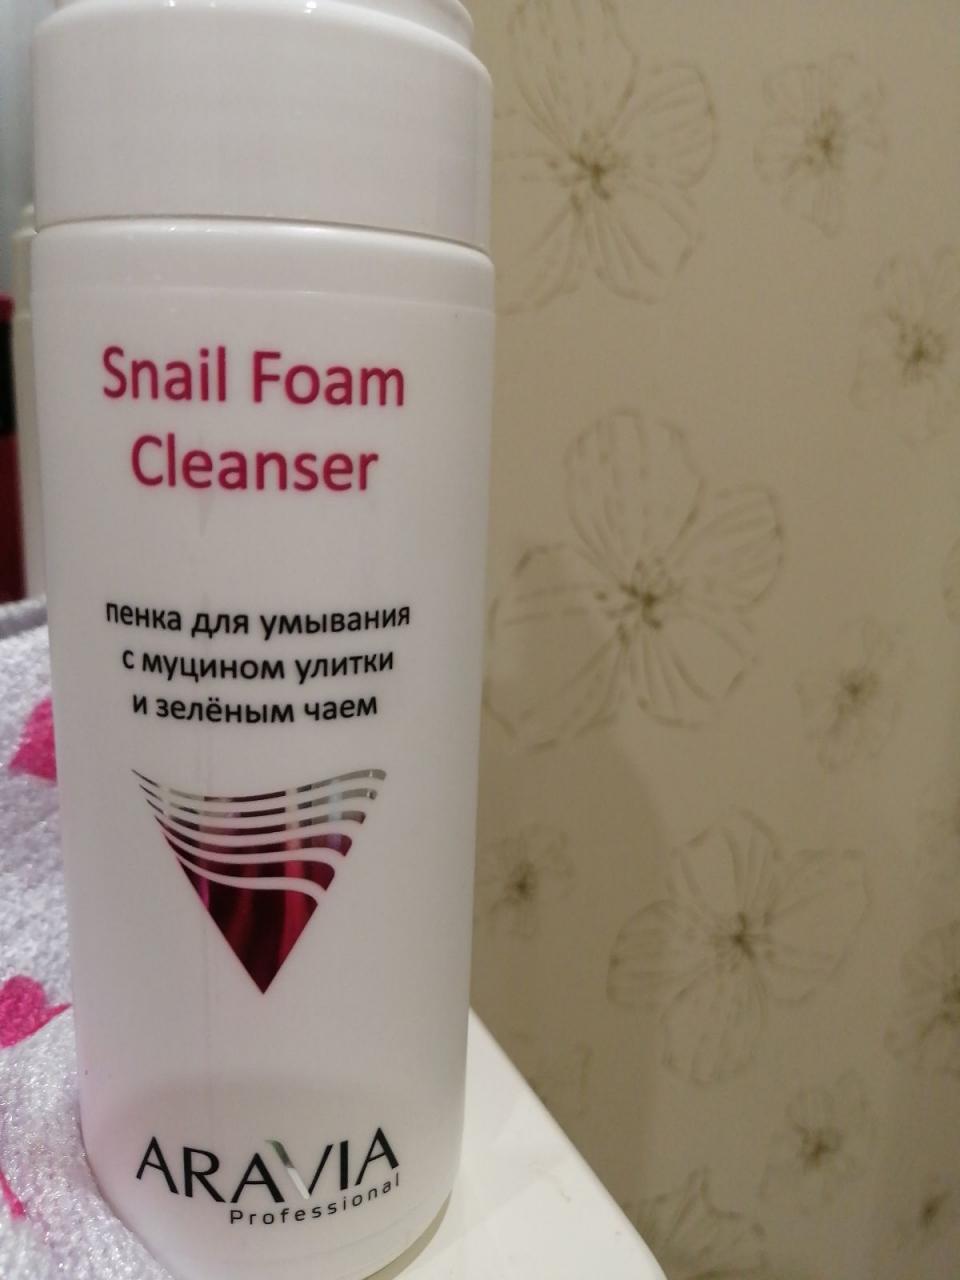 Отзыв на товар: Пенка для умывания с муцином улитки и зелёным чаем Snail Foam Cleanser. Aravia Professional.